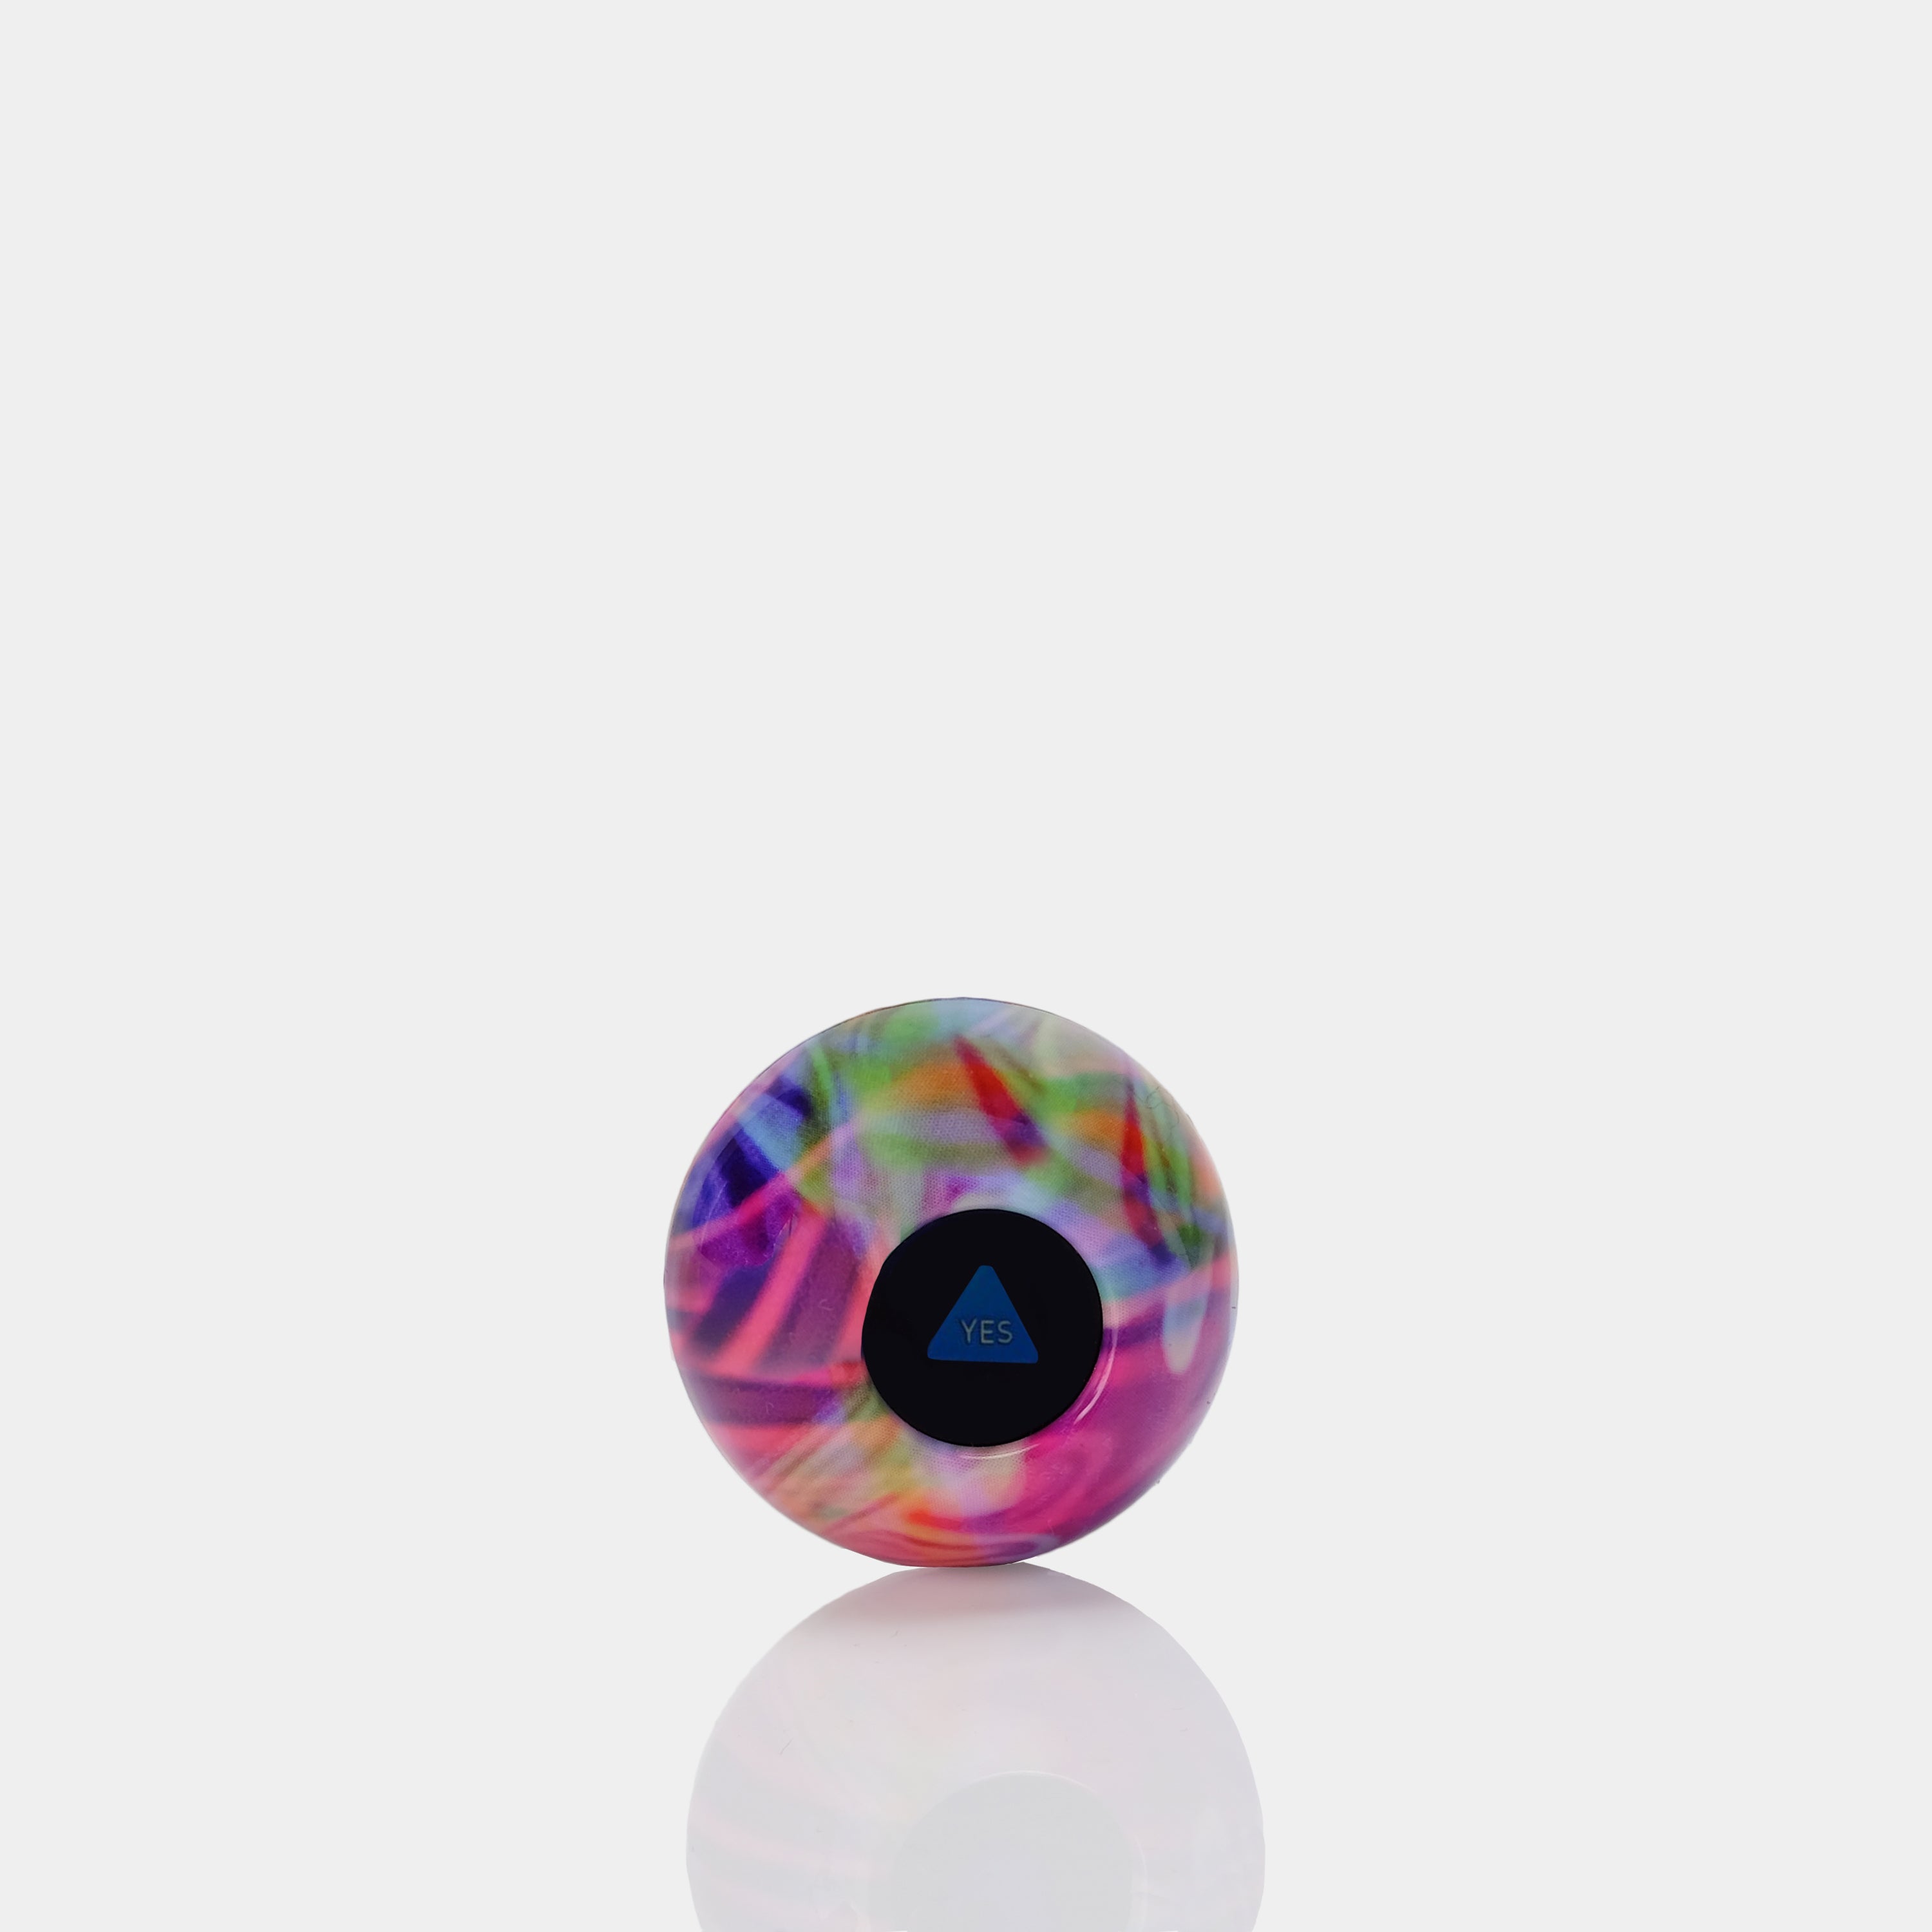 World’s Smallest Tie-Dye Magic 8 Ball